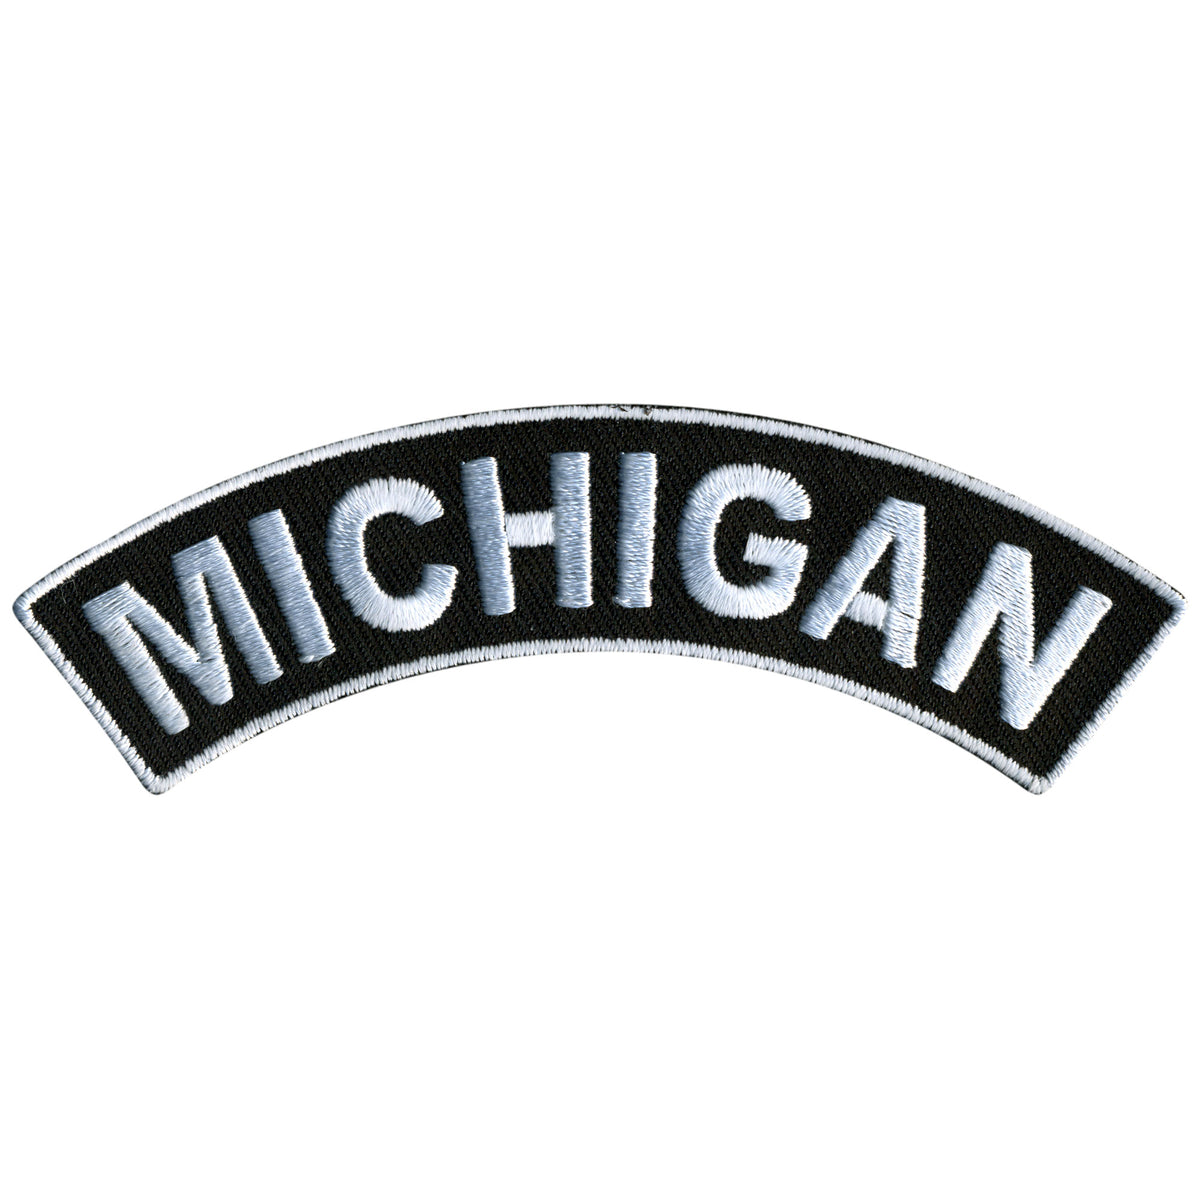 Hot Leathers Michigan 4” X 1” Top Rocker Patch